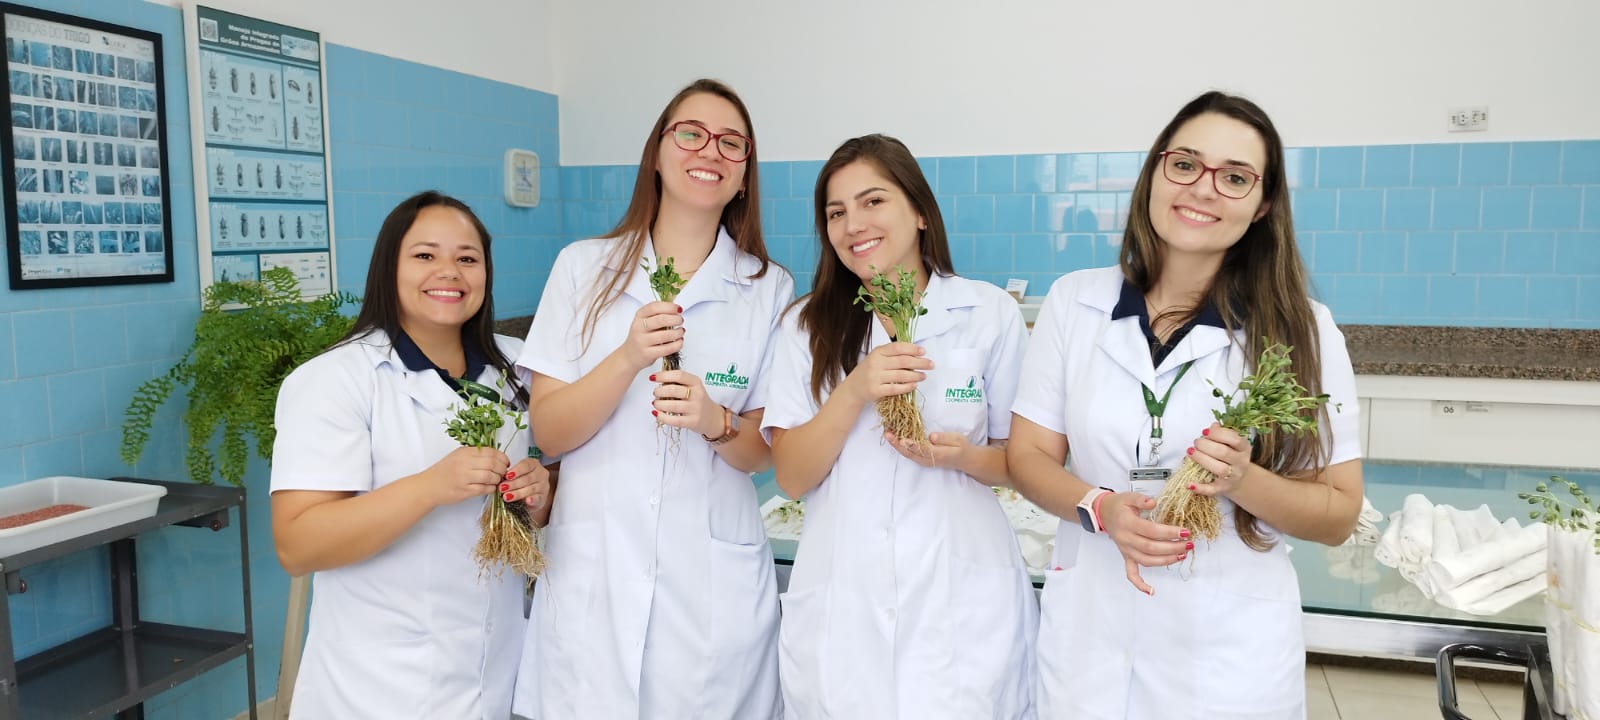 Equipe do Laboratório de Sementes (esquerda para direita): Bruna Isabele da Silva, Nathalia Rebolho Turozi, Jordana Mayra Nassar e Amanda Turozi Zulianelli de Lima